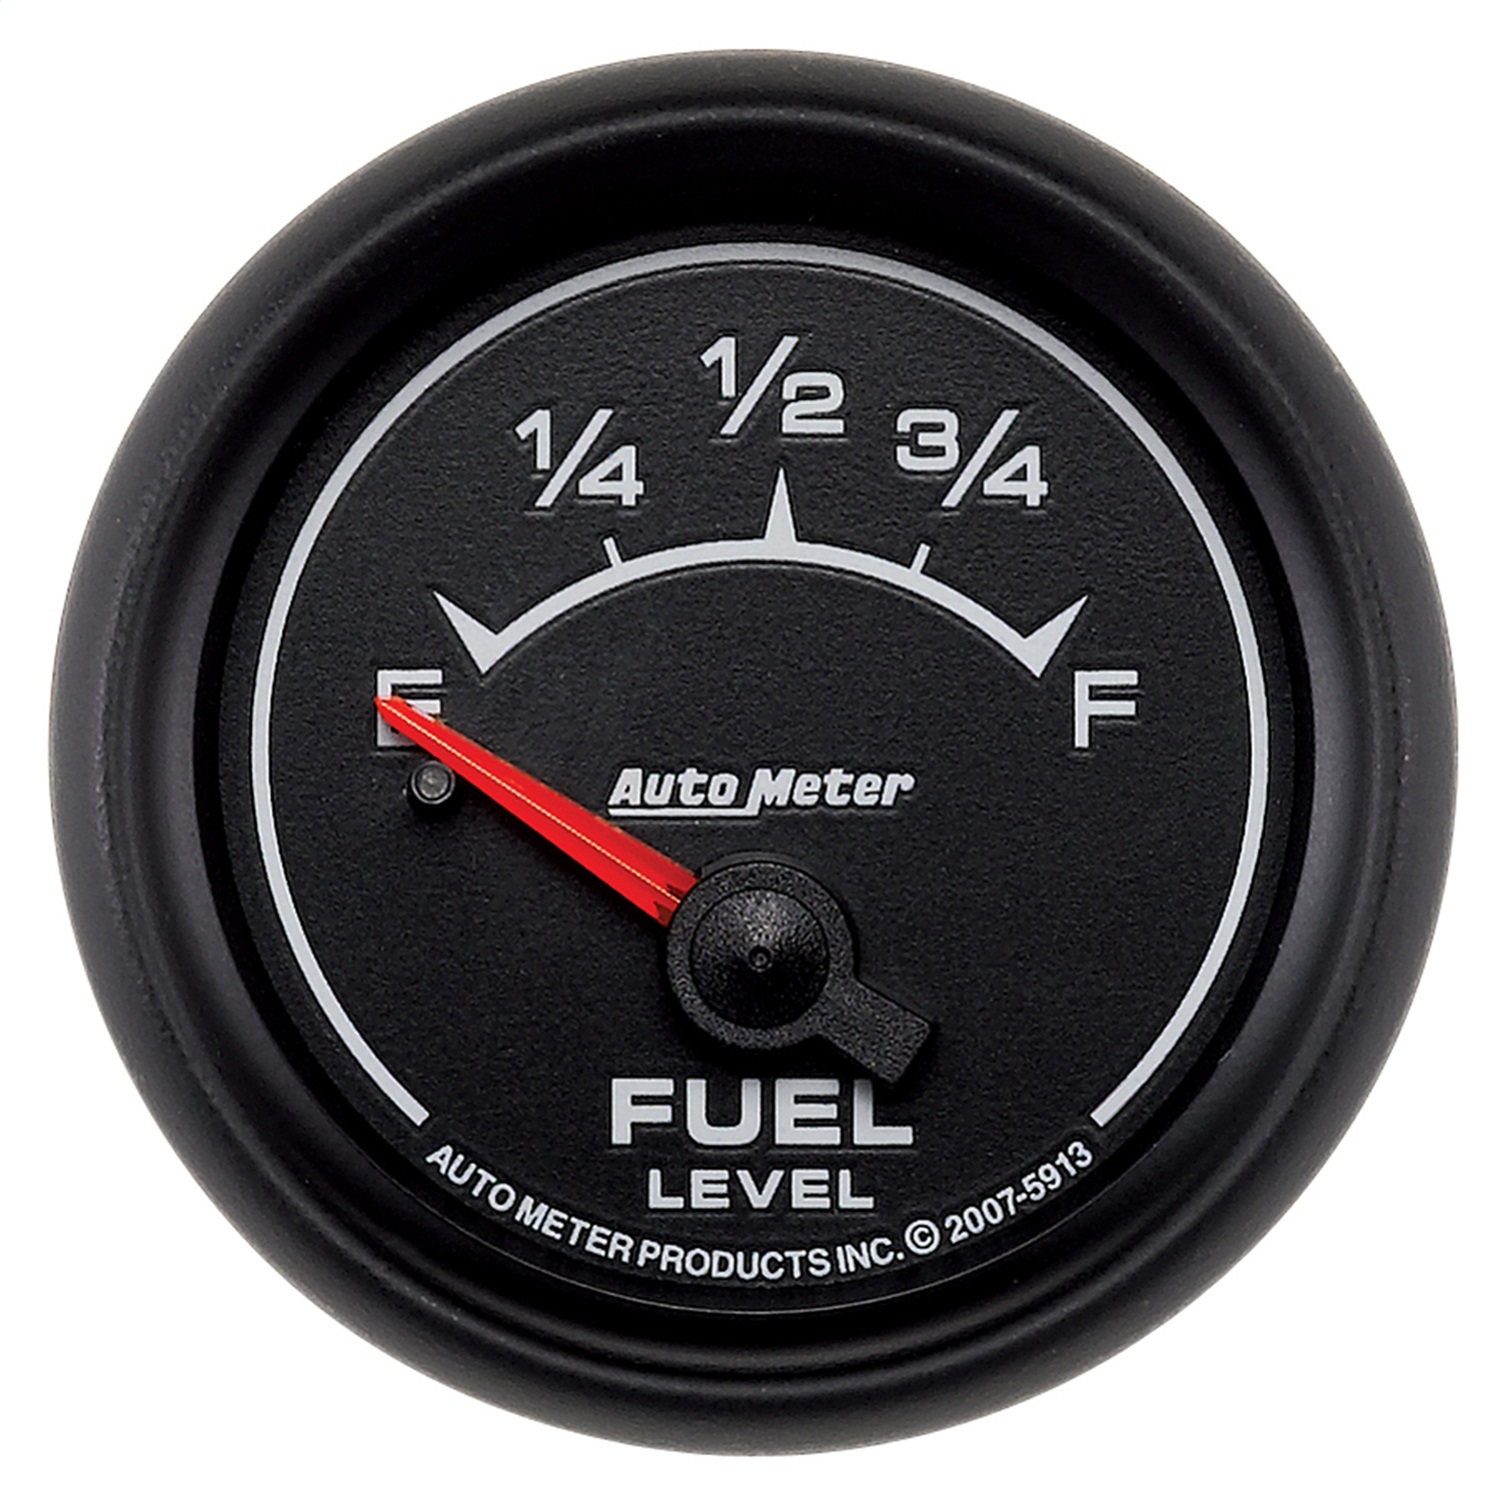 Auto Meter Auto Meter 5913 ES; Electric Fuel Level Gauge